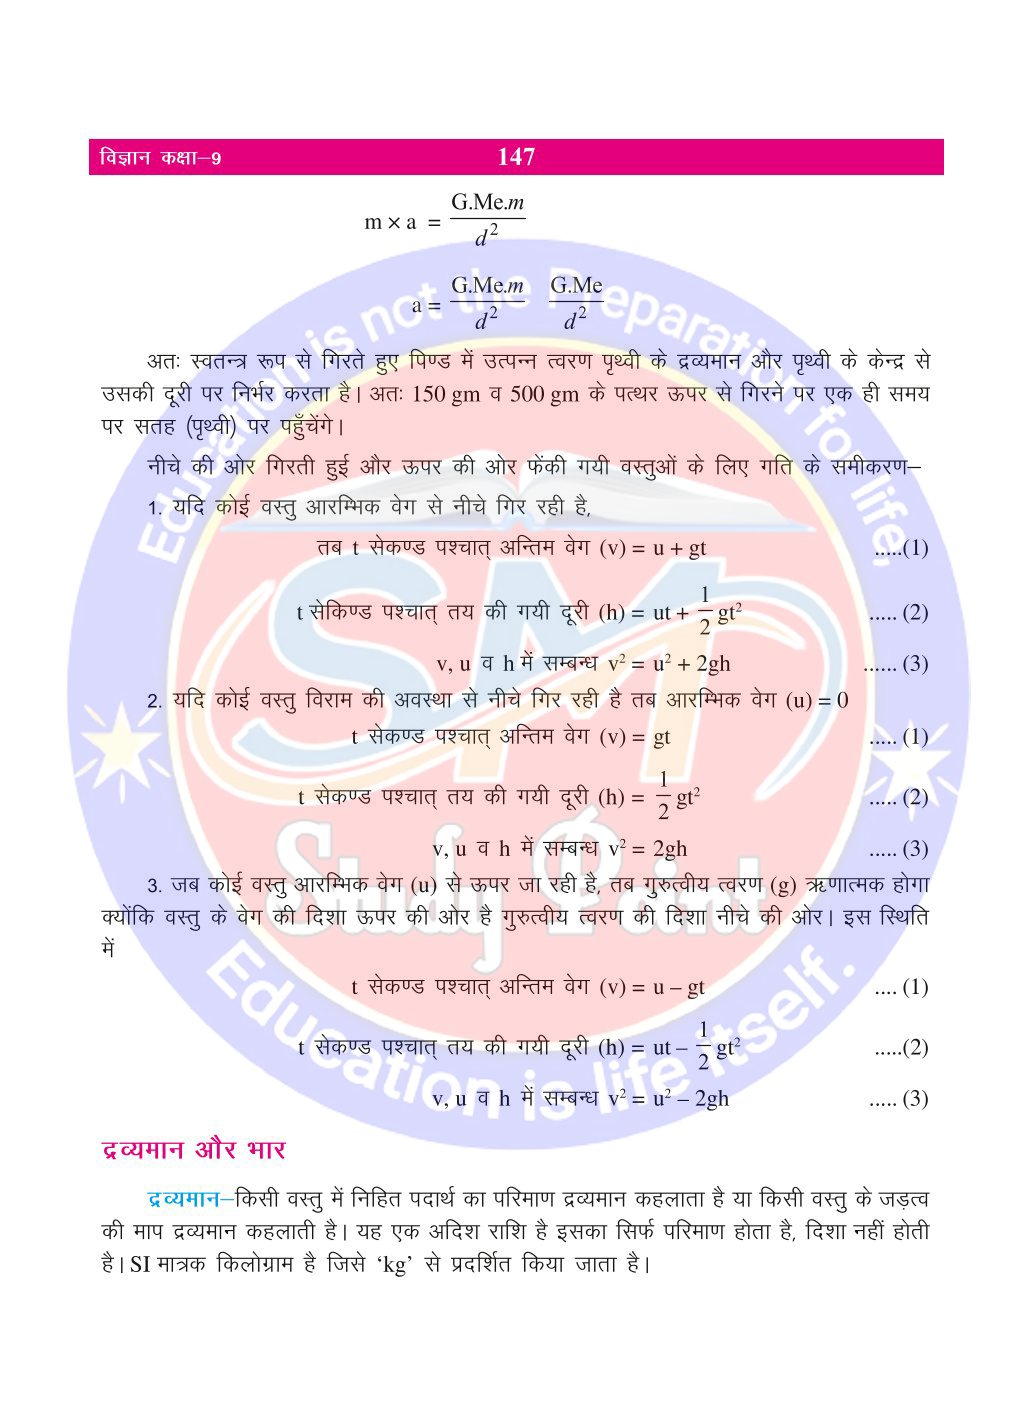 Bihar Board Class 9th Physics | Gravity | Class 9 Physics Rivision Notes PDF | गुरुत्वाकर्षण | बिहार बोर्ड क्लास 9वीं भौतिकी नोट्स | कक्षा 9 भौतिकी हिंदी में नोट्स